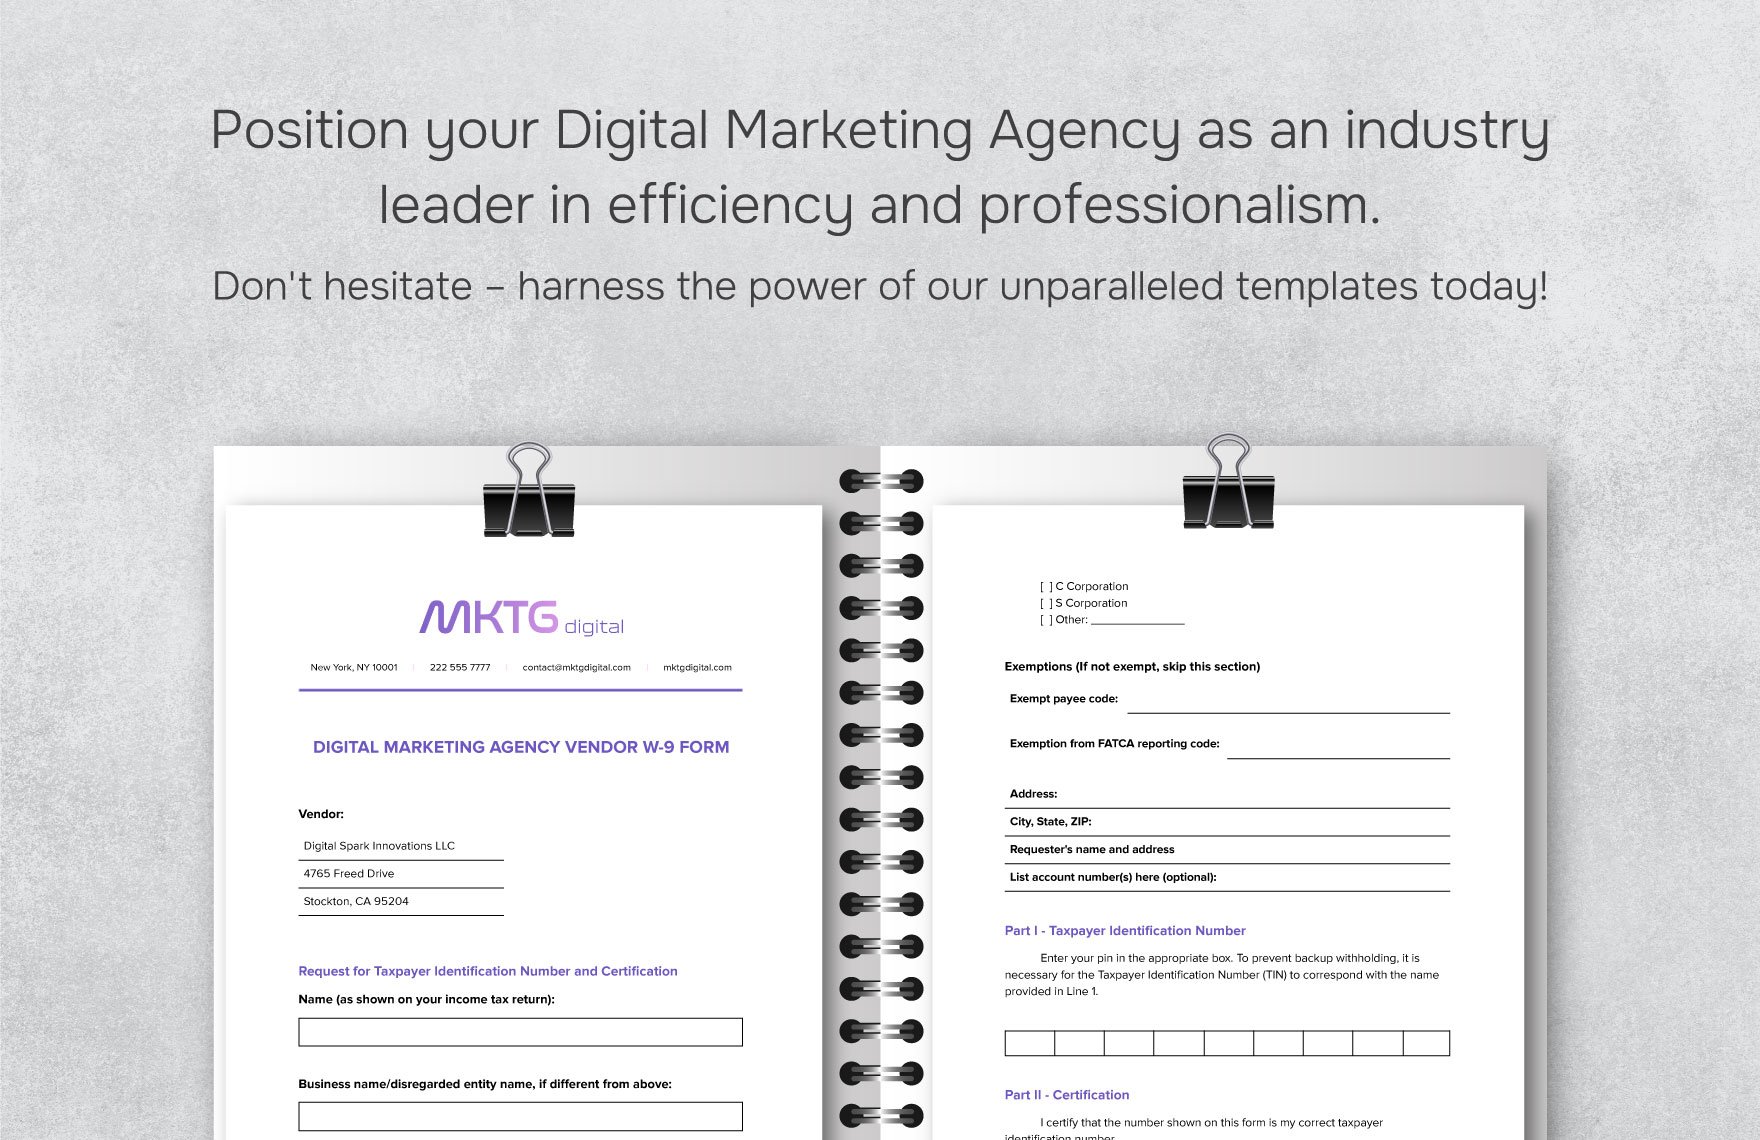 Digital Marketing Agency Vendor W-9 Form Template